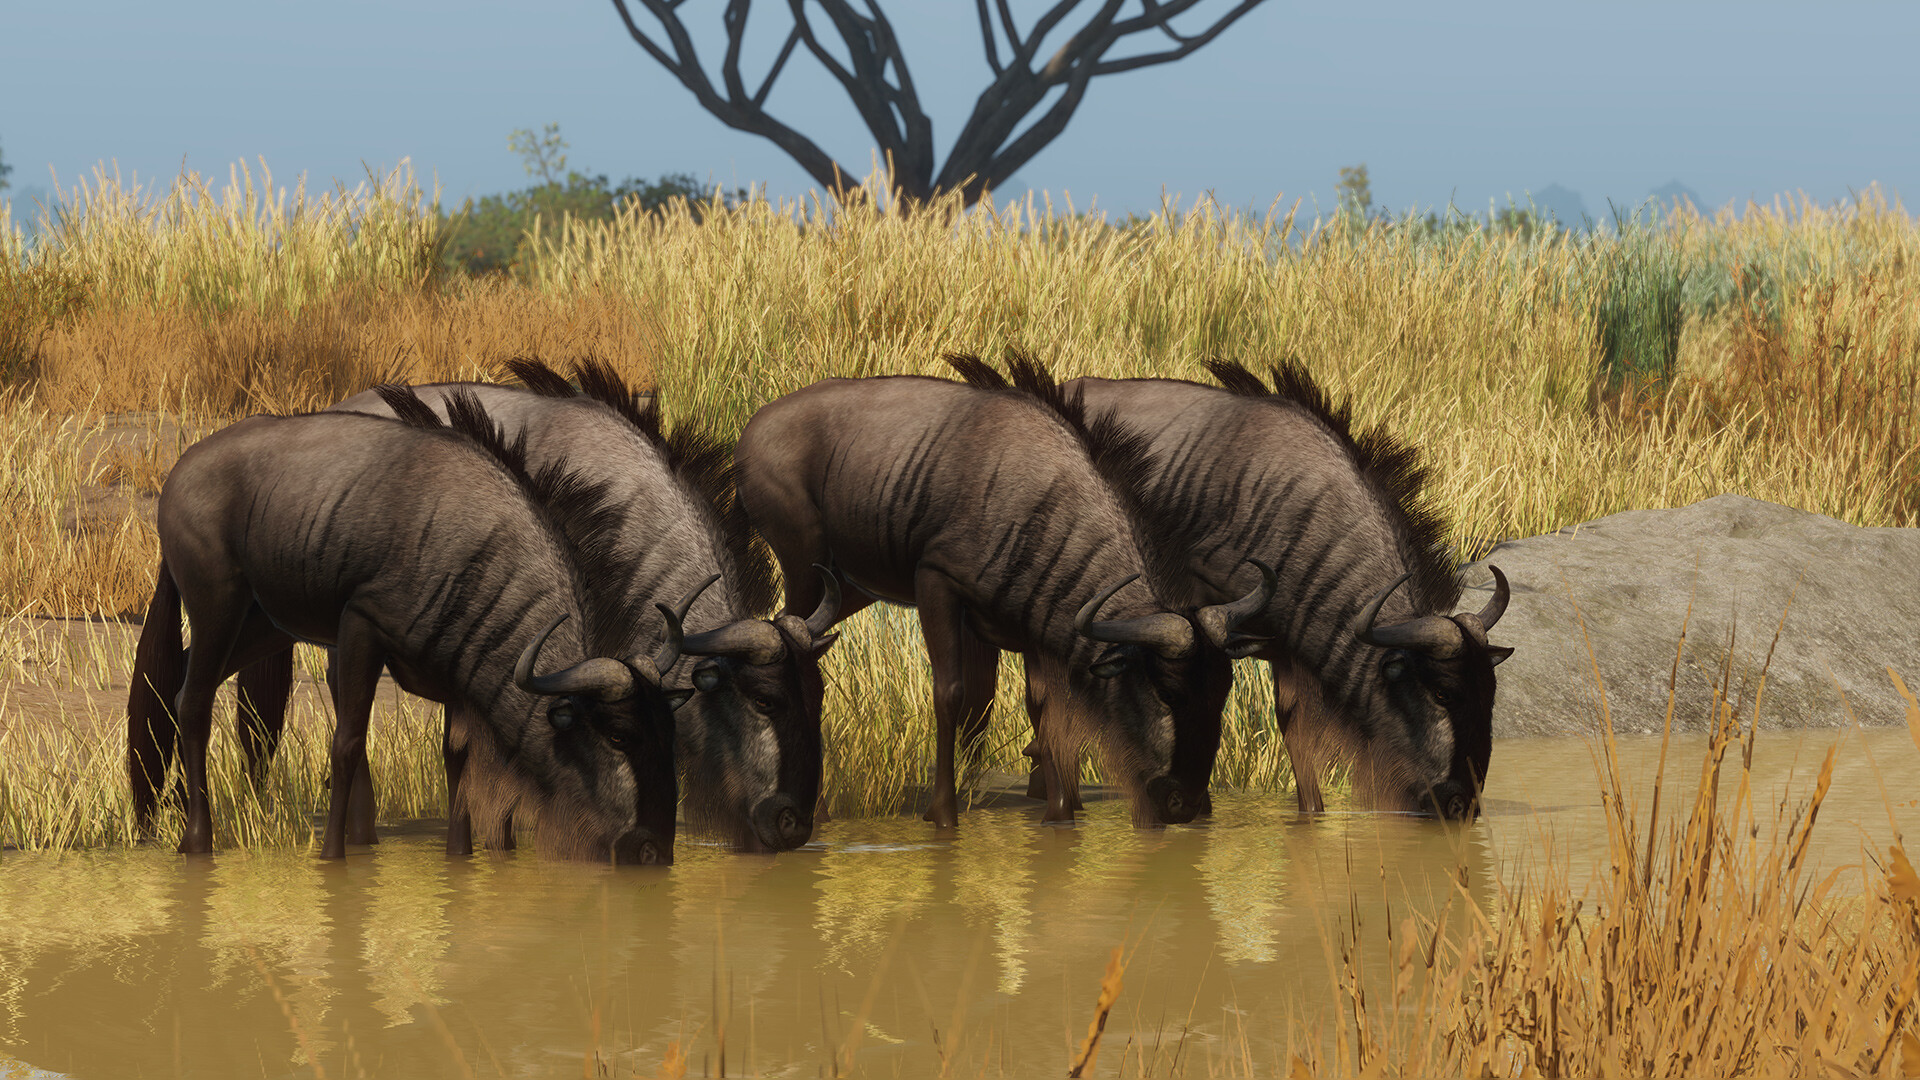 Planet Zoo - Grasslands Animal Pack DLC Steam CD Key